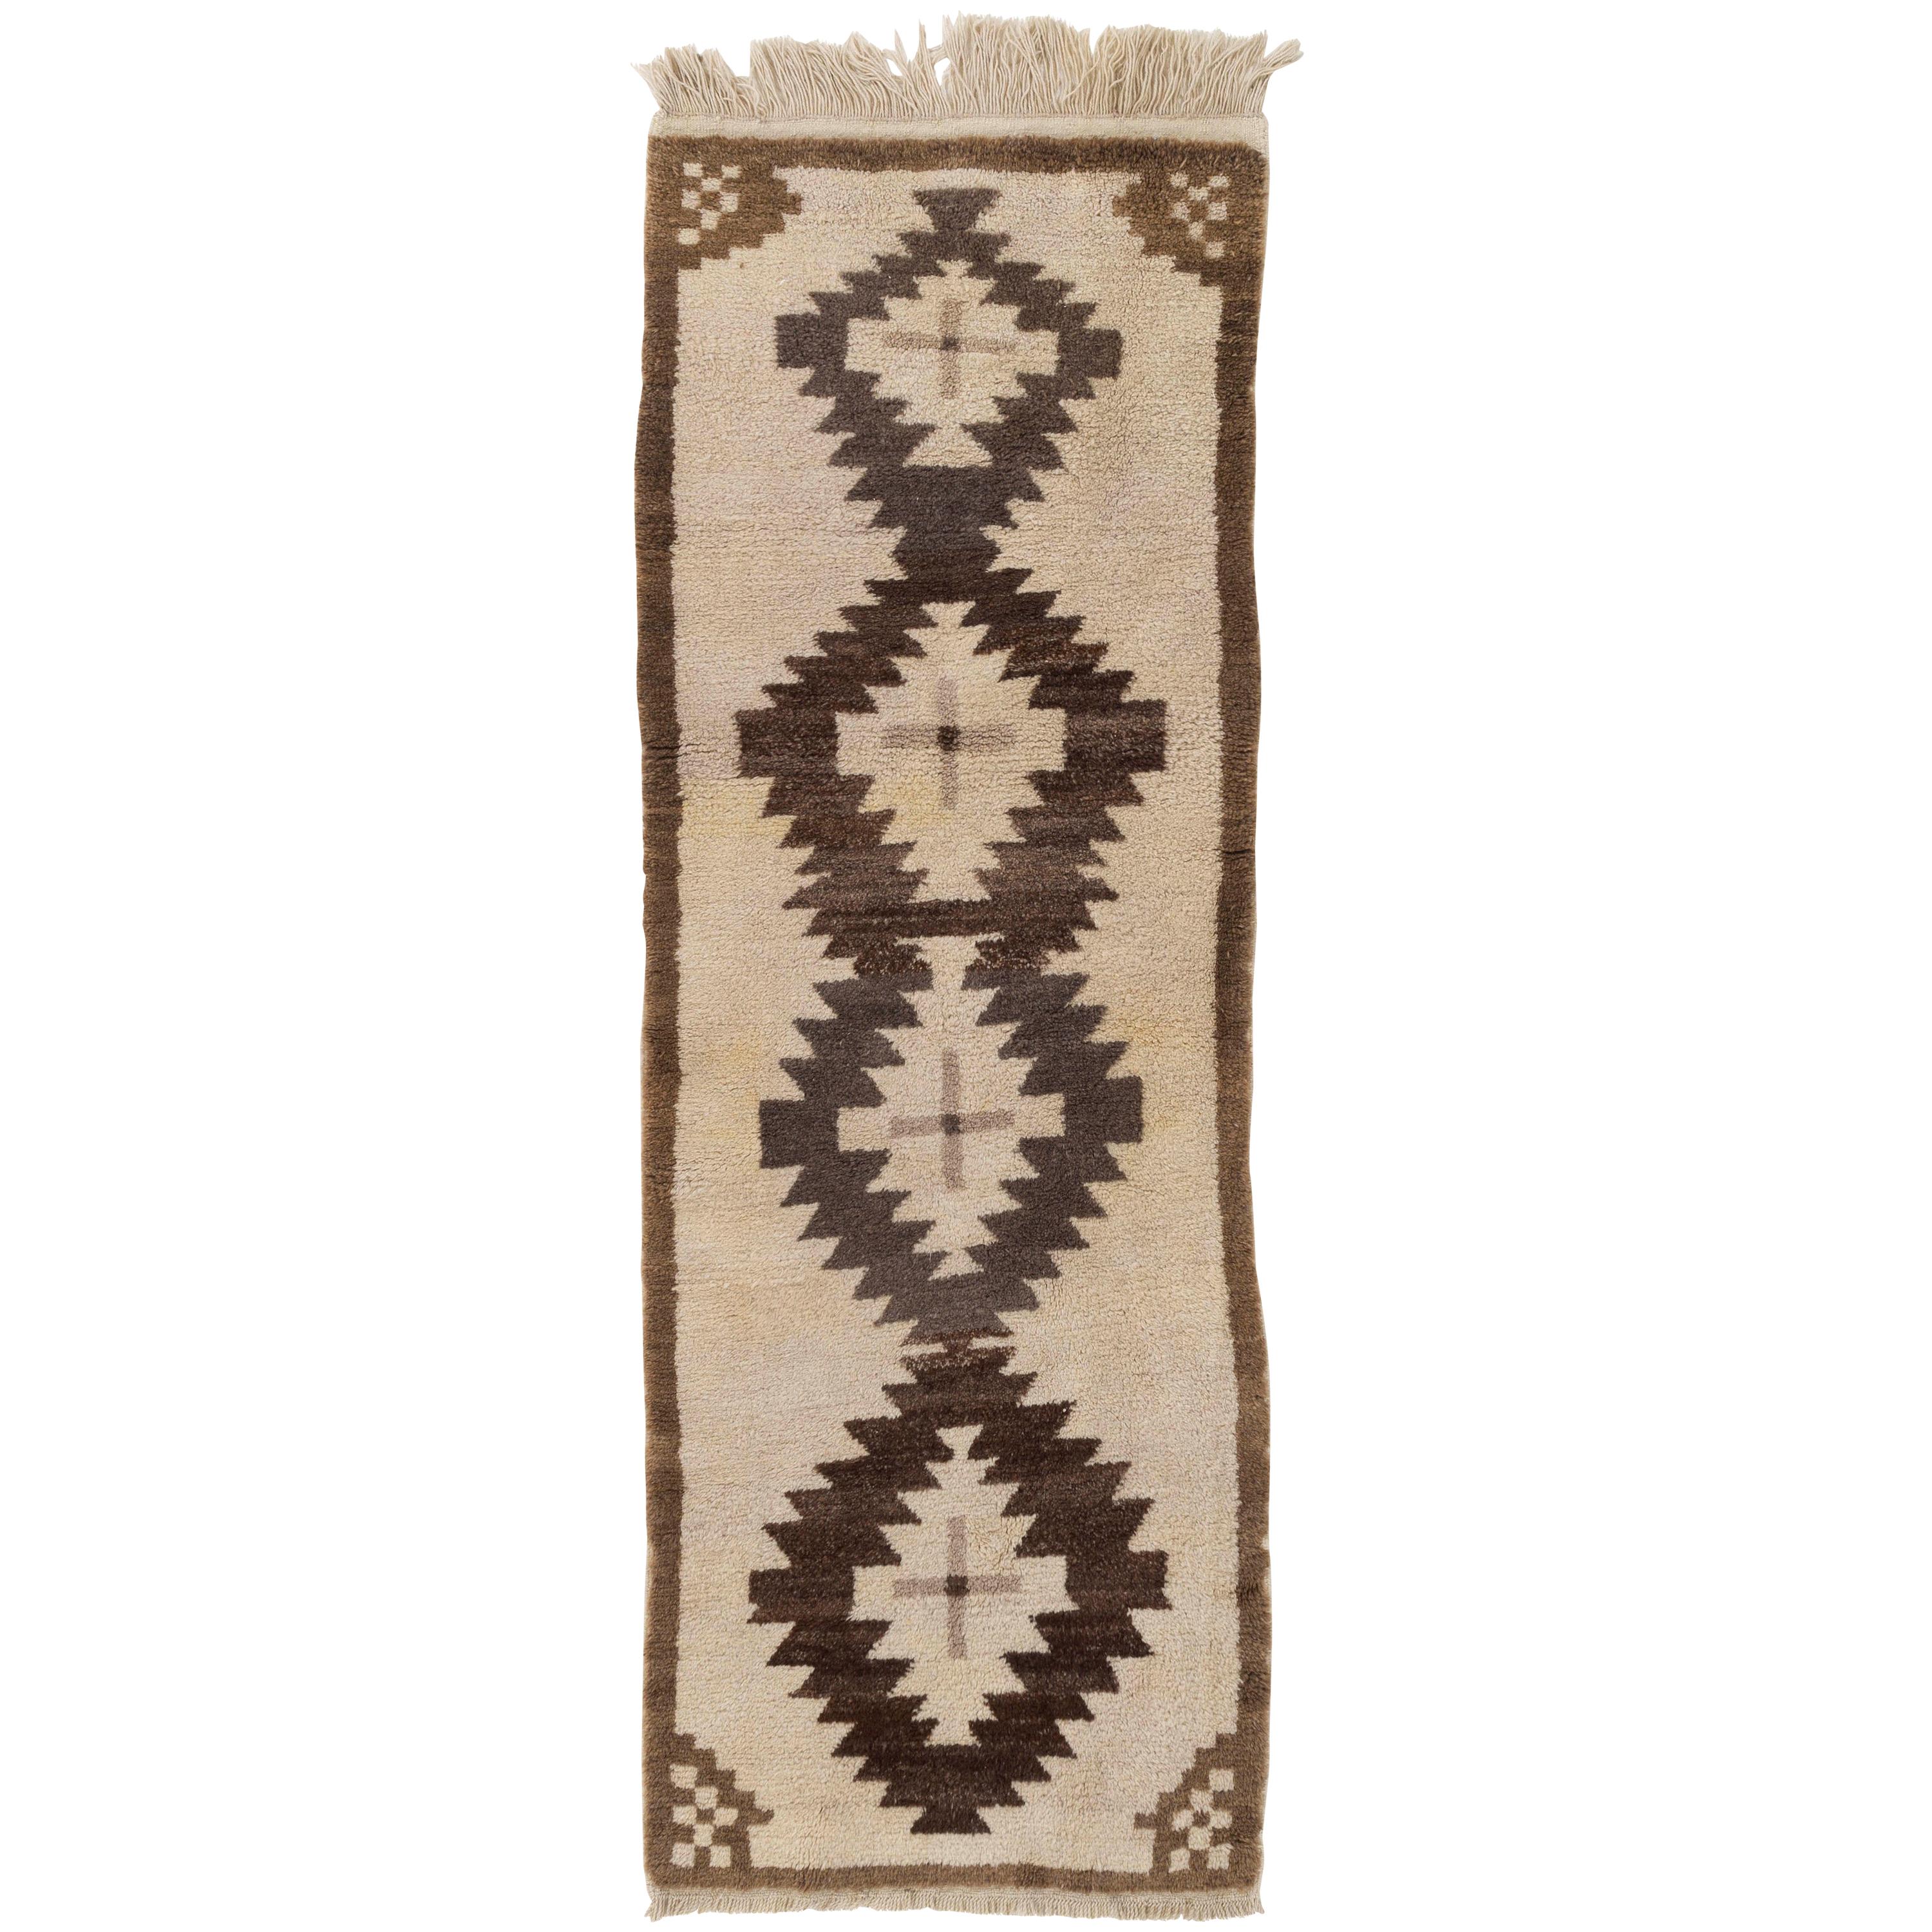 2.7x7.3 ft Vintage Tulu Runner Rug. 100% Natural Wool. Custom Options Available